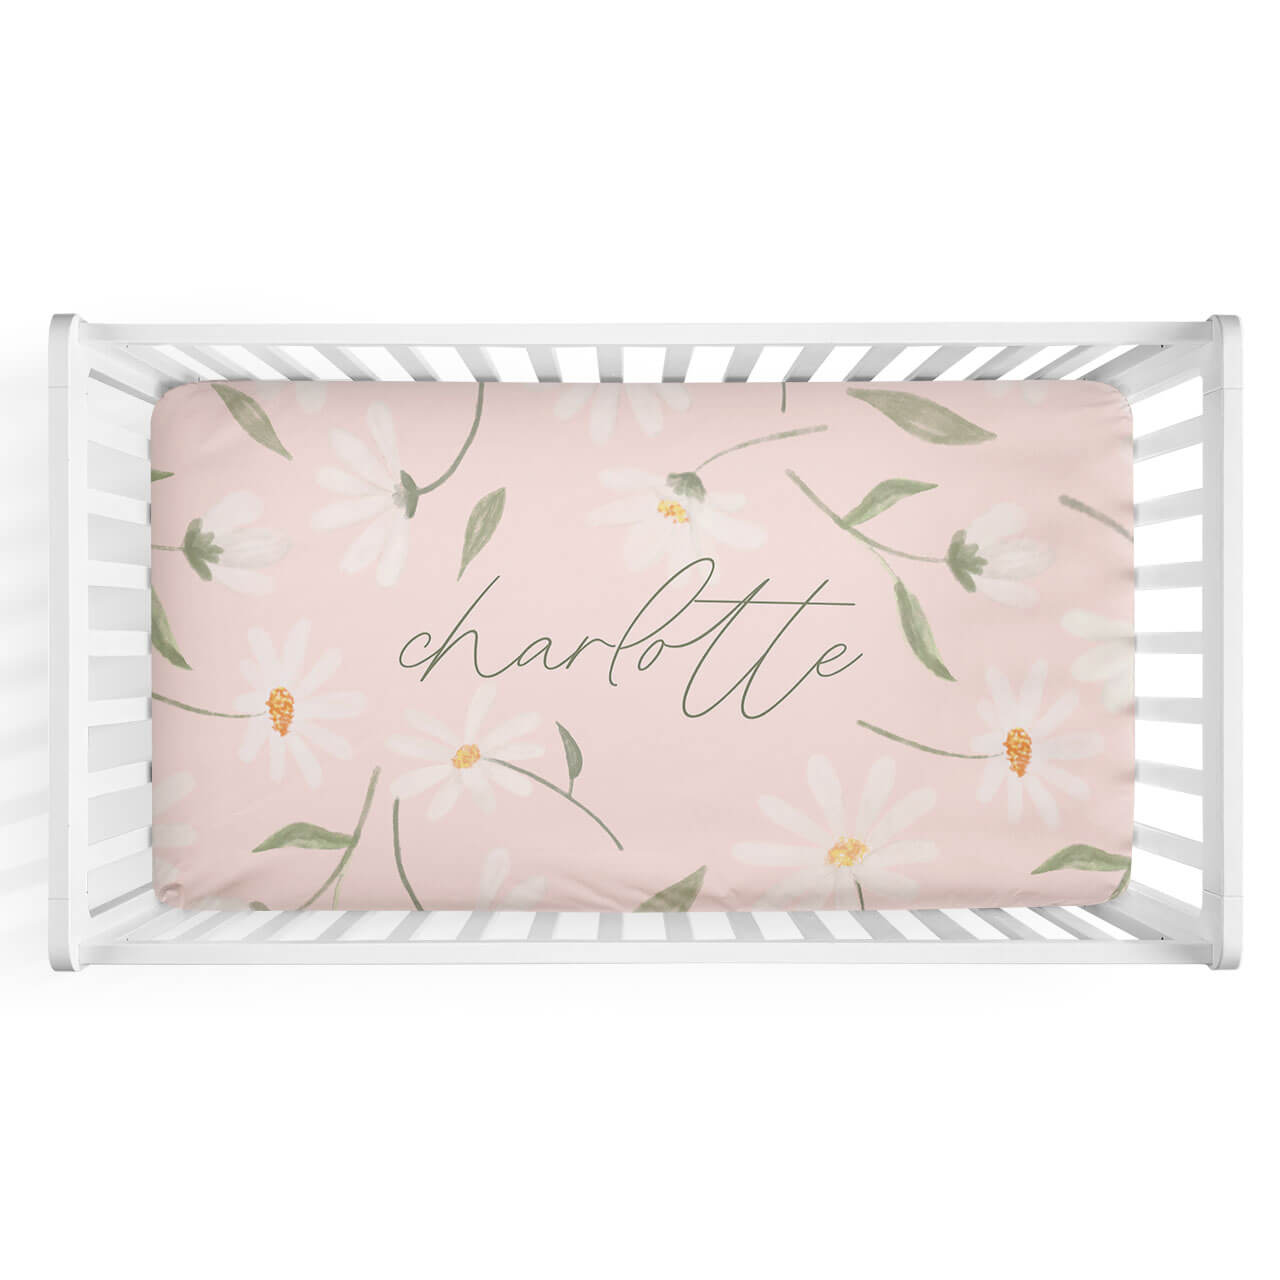 sweet daisy in blush personalized crib sheet 